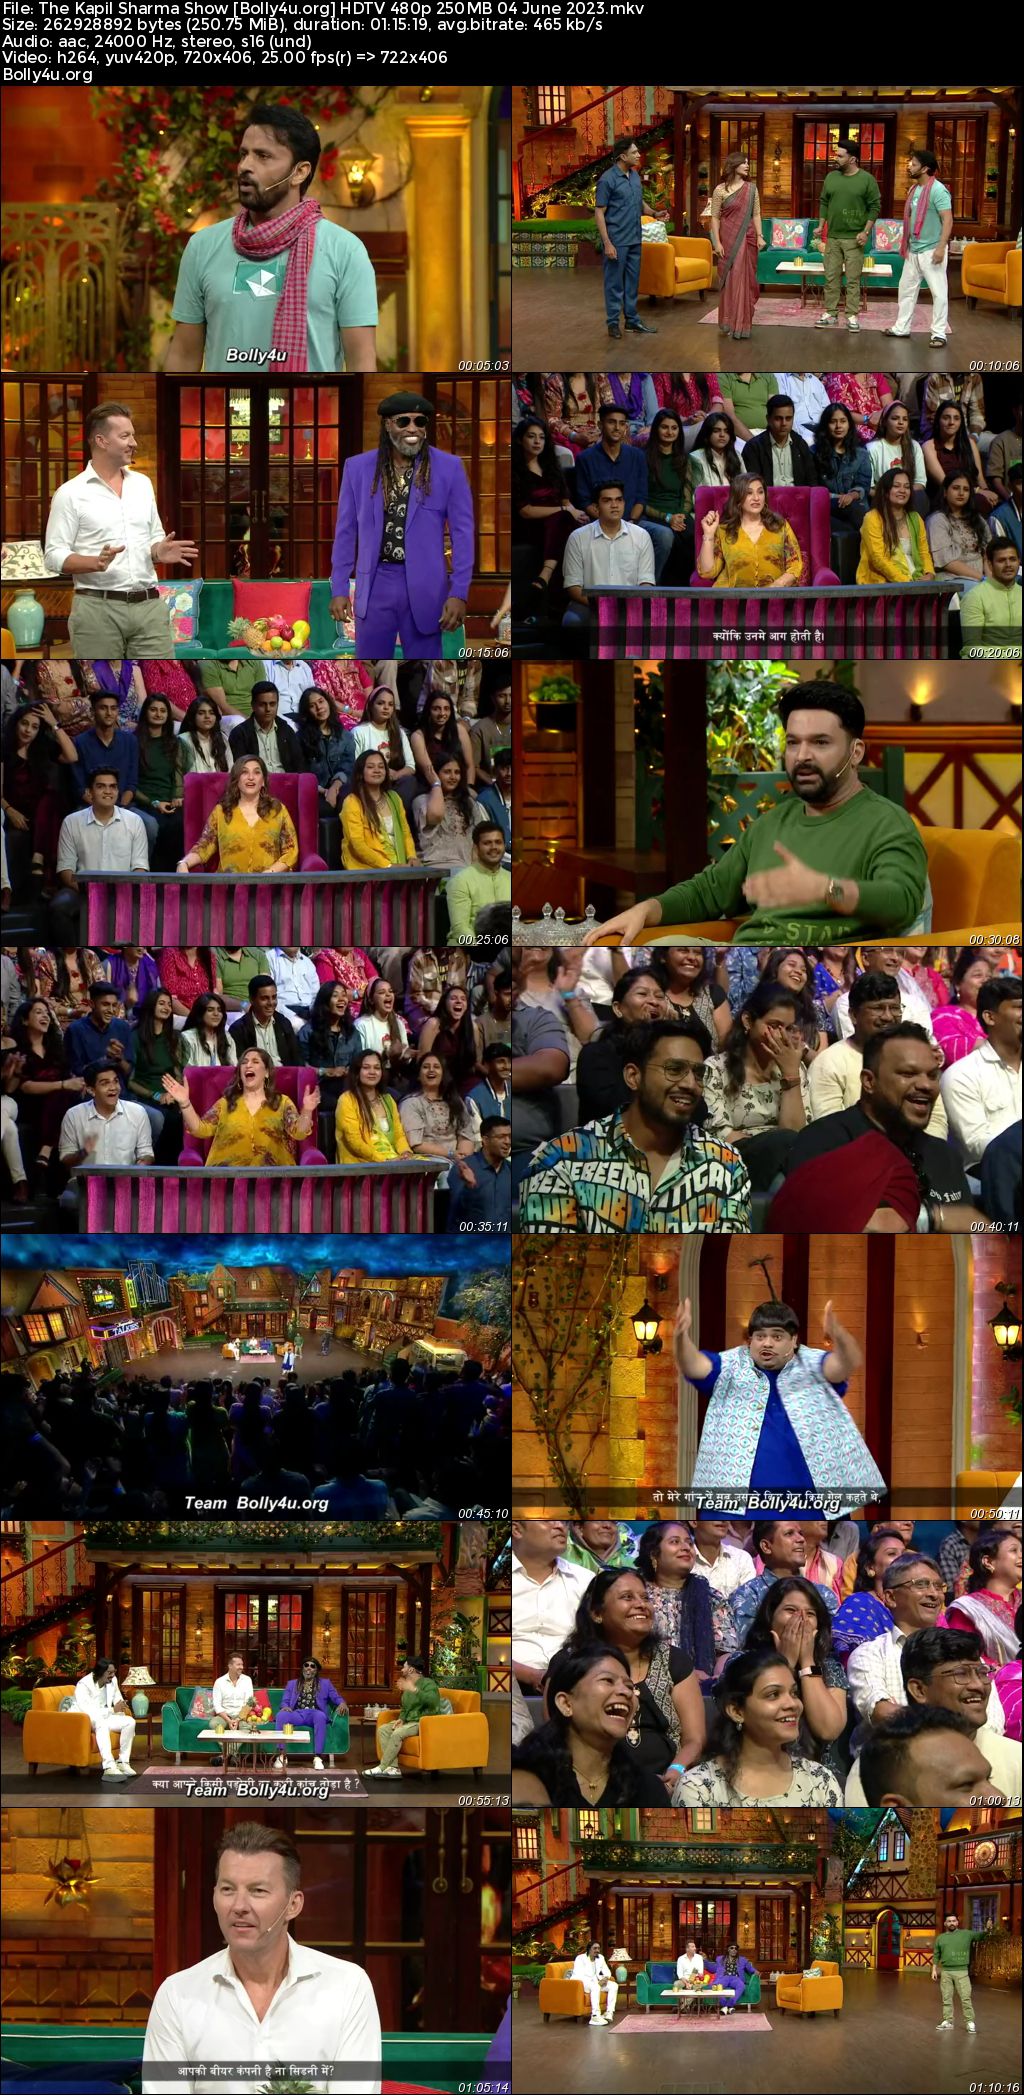 The Kapil Sharma Show HDTV 480p 250MB 04 June 2023 Download